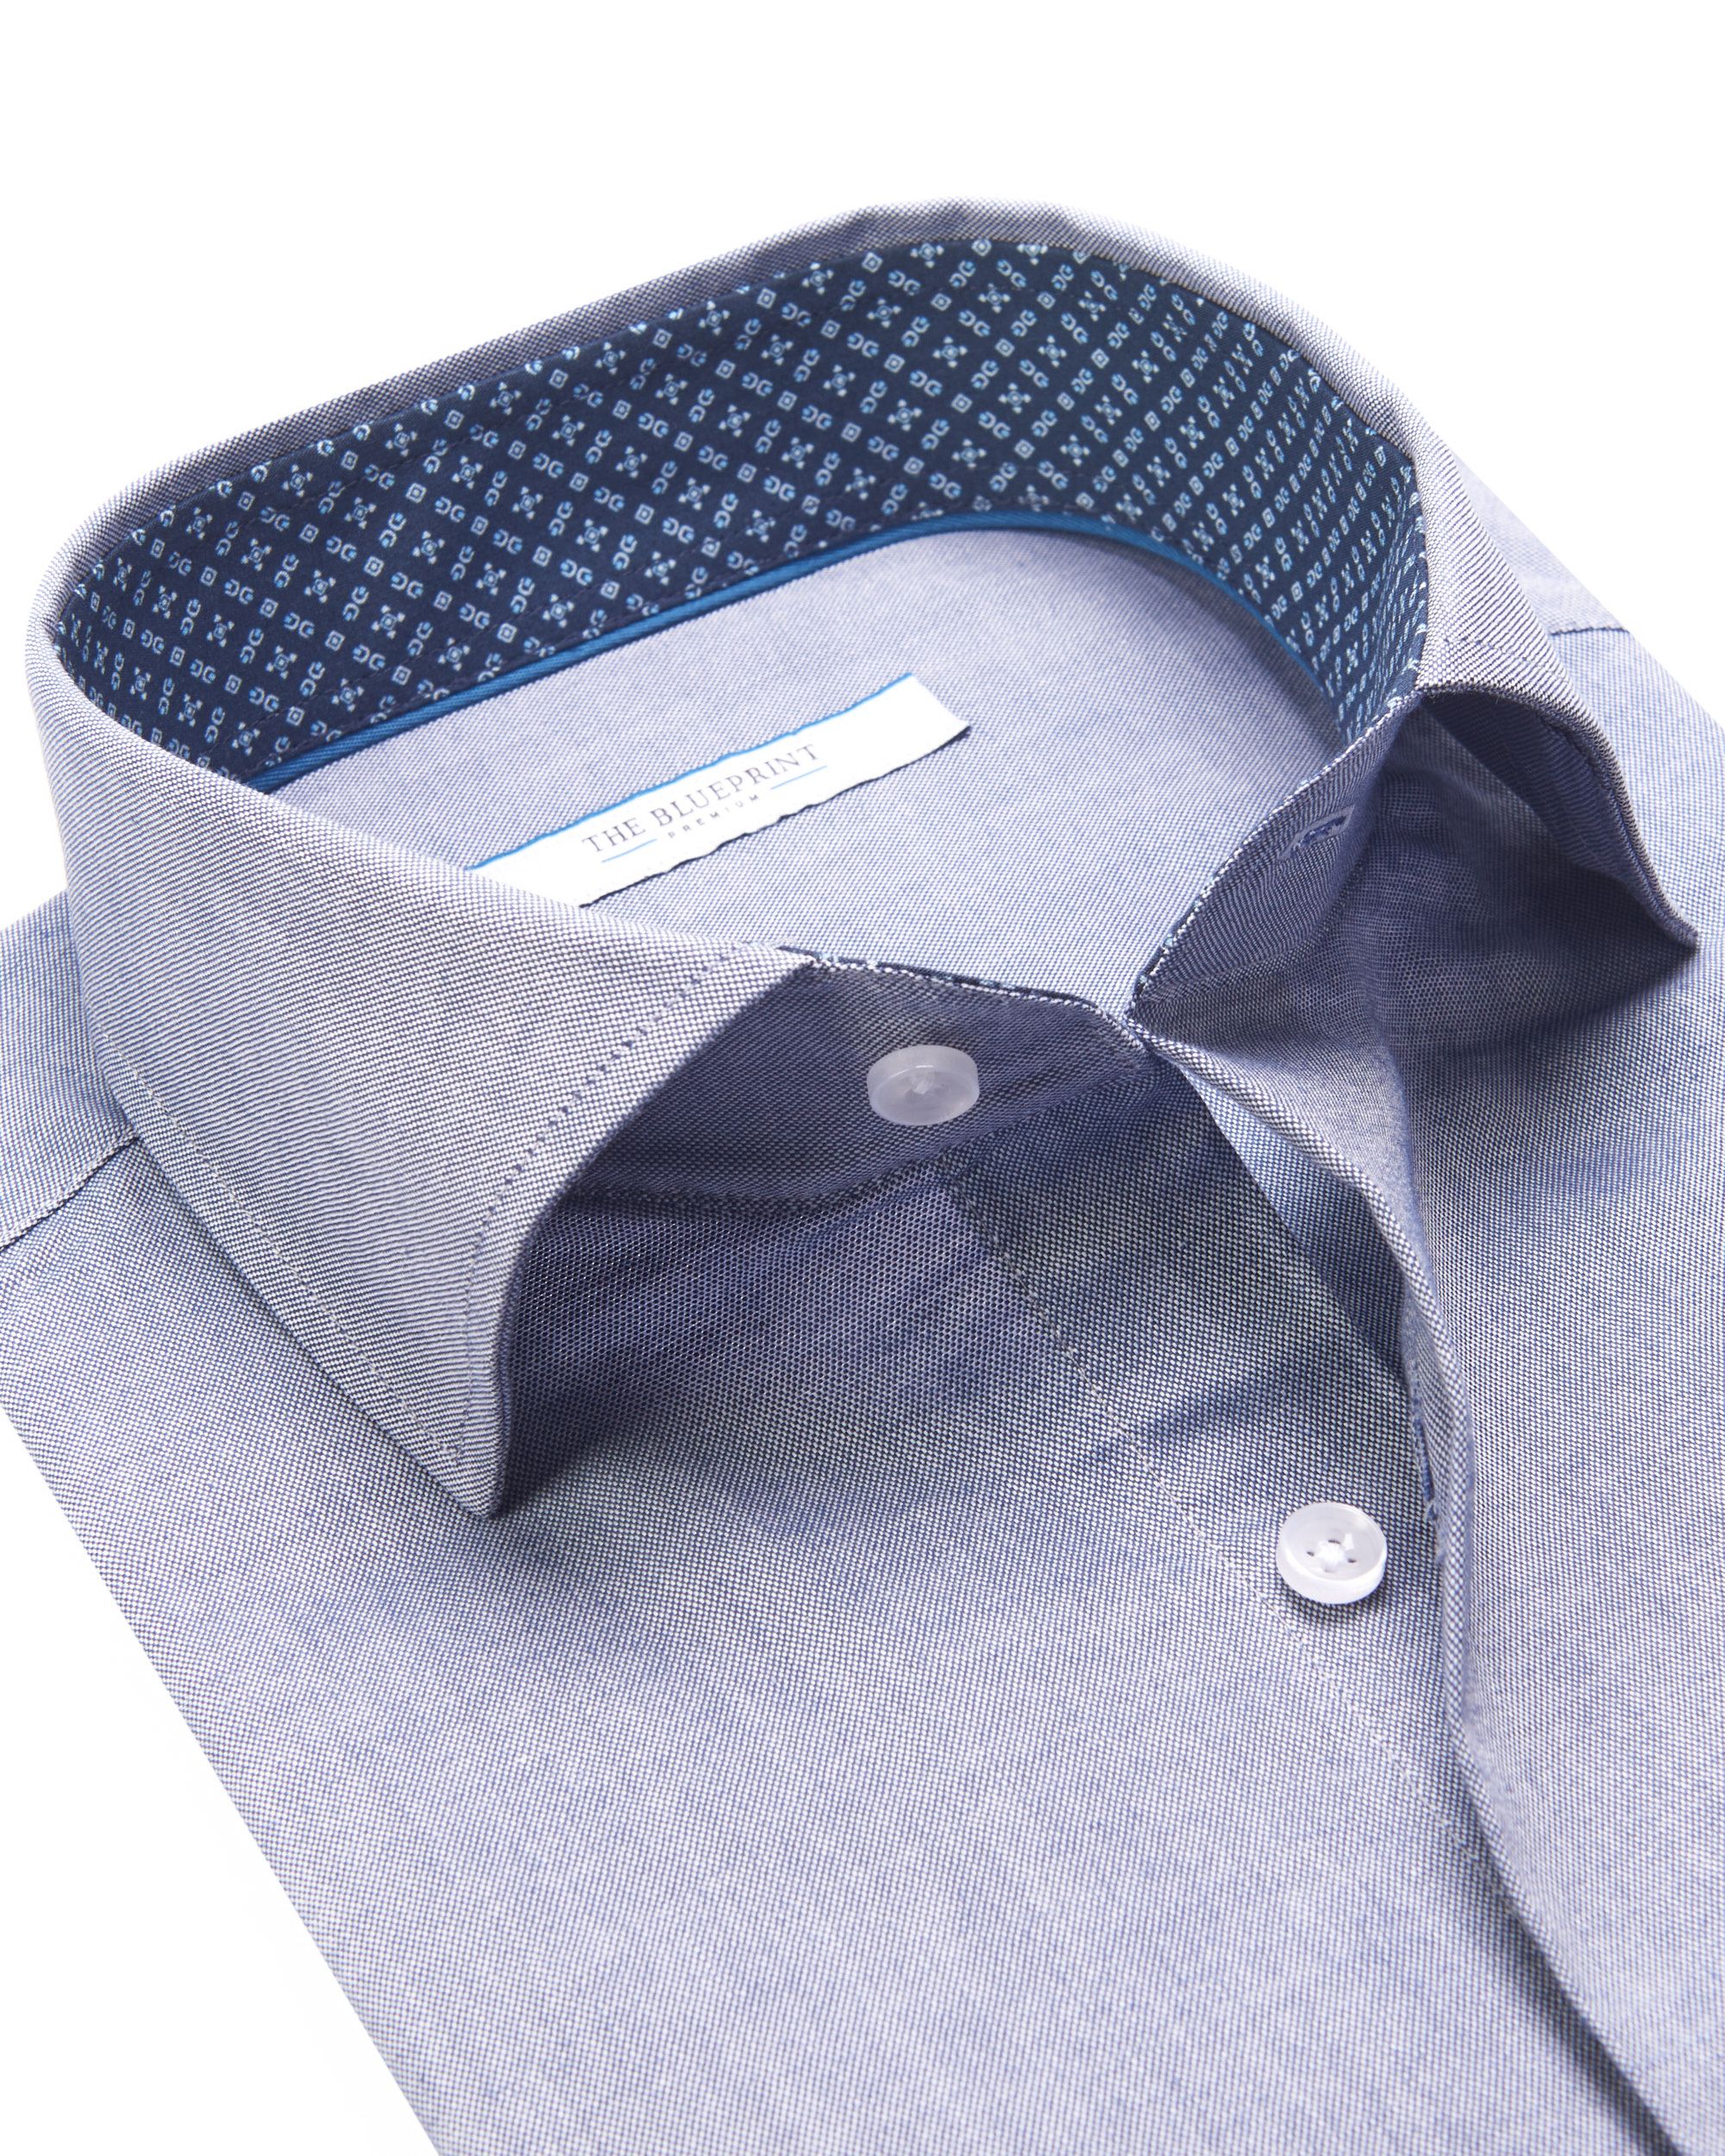 The BLUEPRINT Premium Casual Overhemd LM Blauw uni 082231-001-L